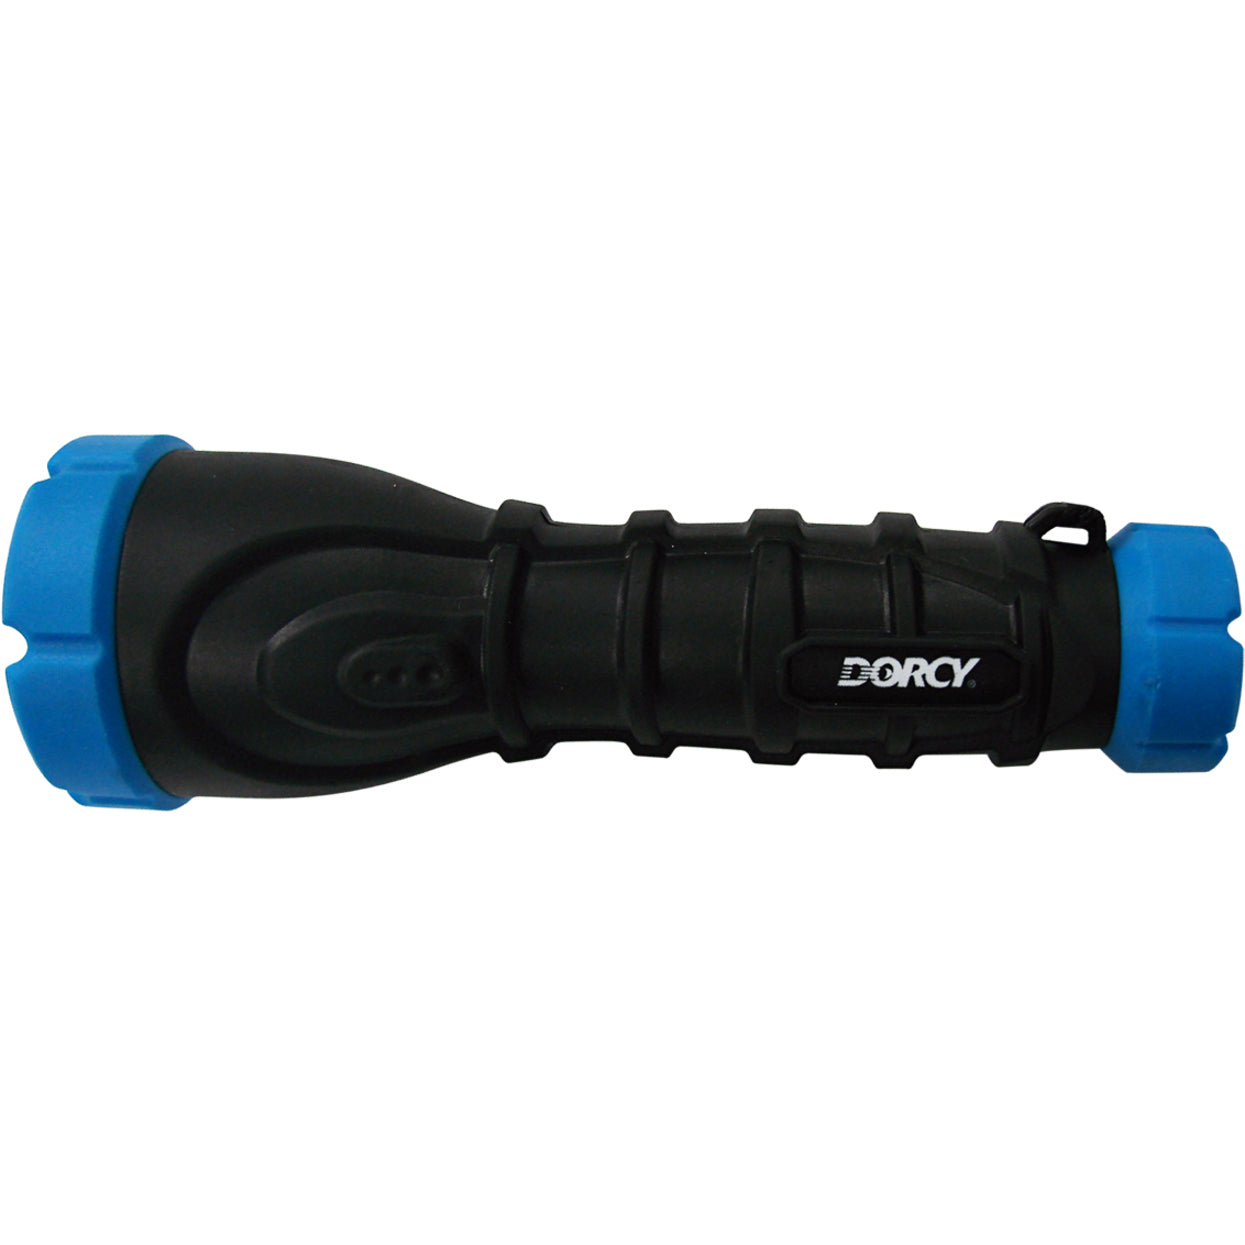 Dorcy 41-2958 Rubber 45 Lumen LED Flashlight, Weather Resistant, Battery Powered